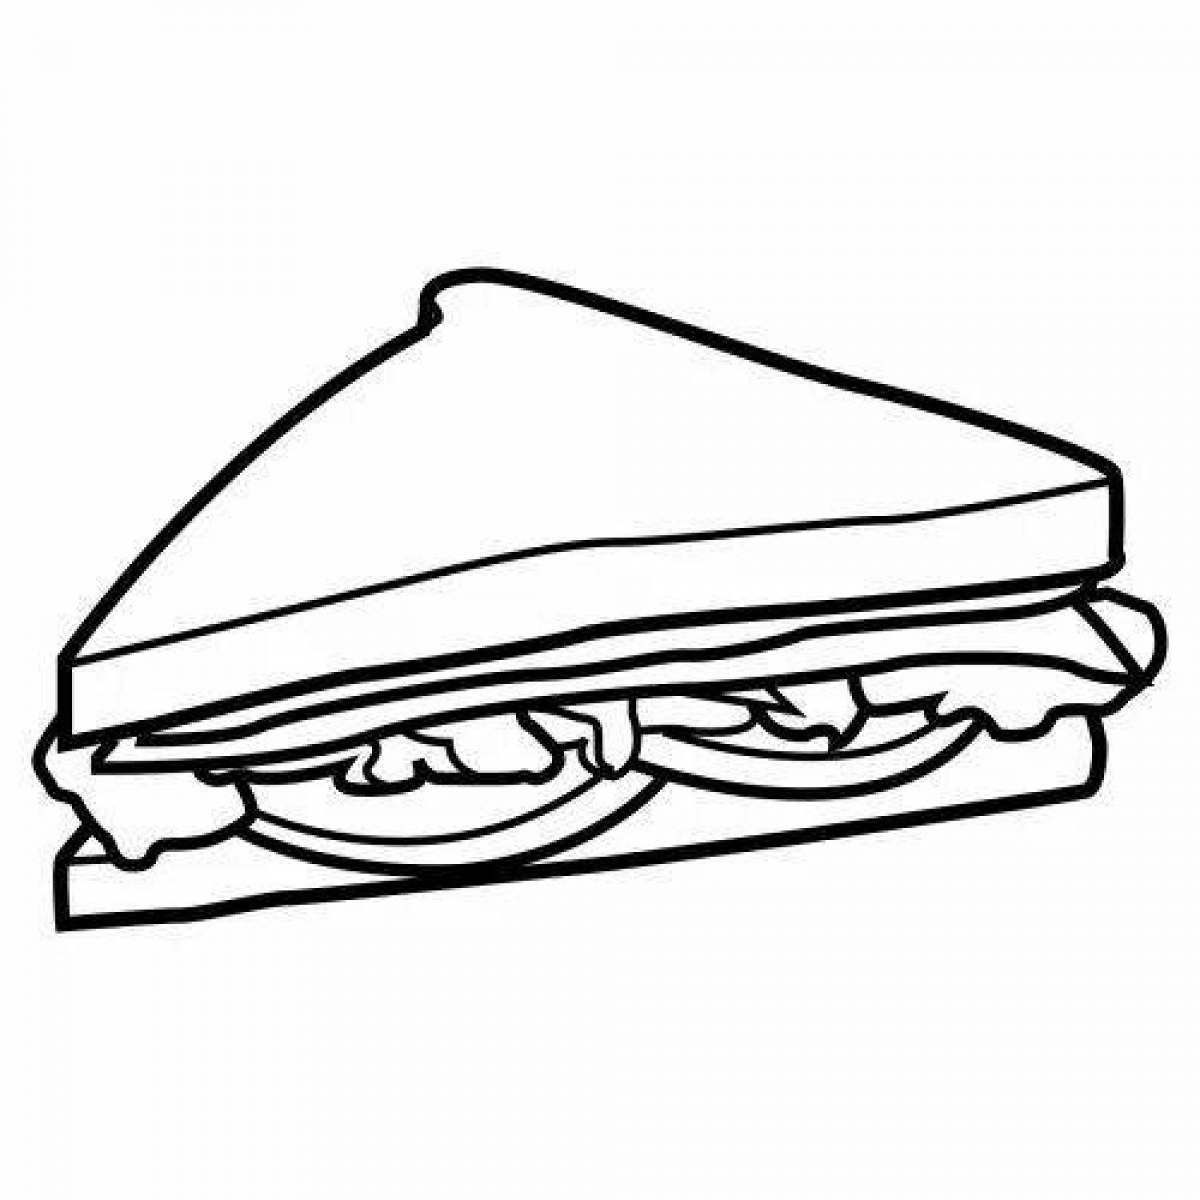 Coloring appetizing sandwich